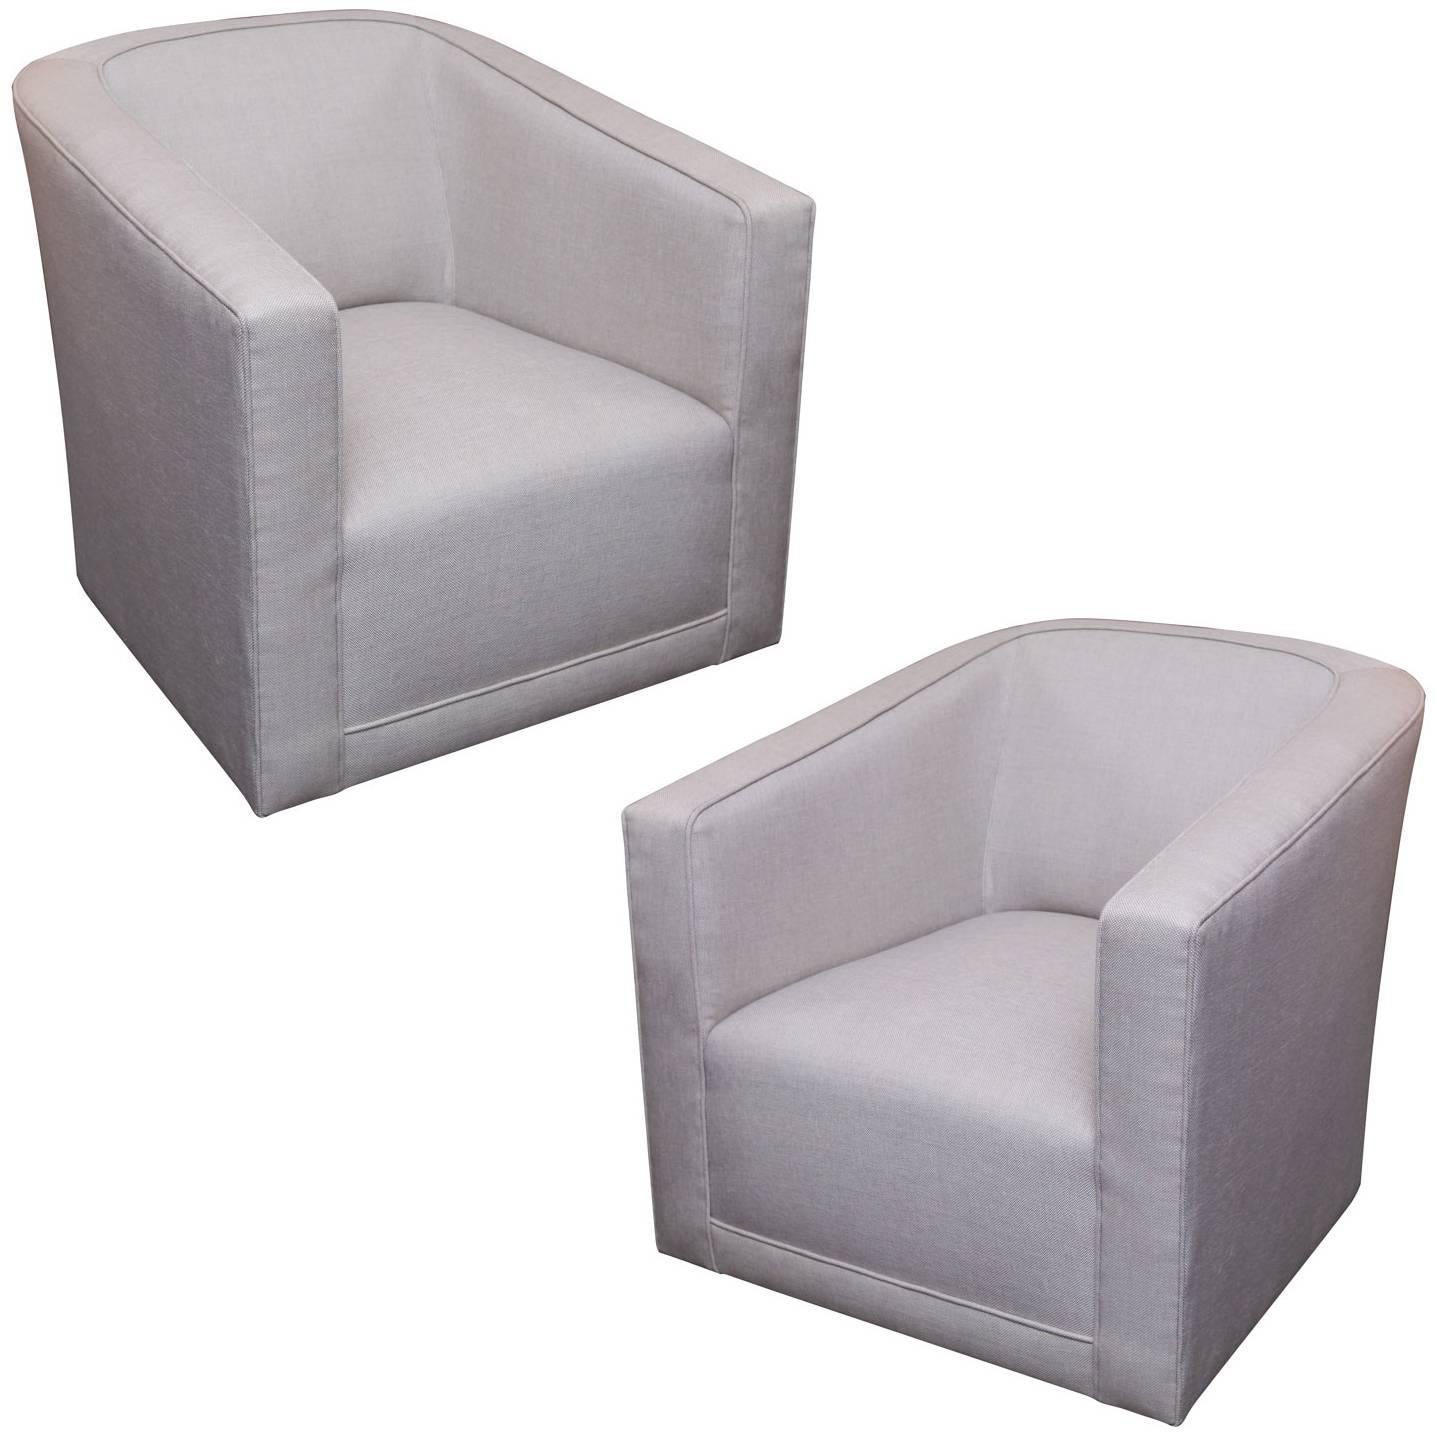 Pair of Modern Swivel Chairs in Light Gray Linen